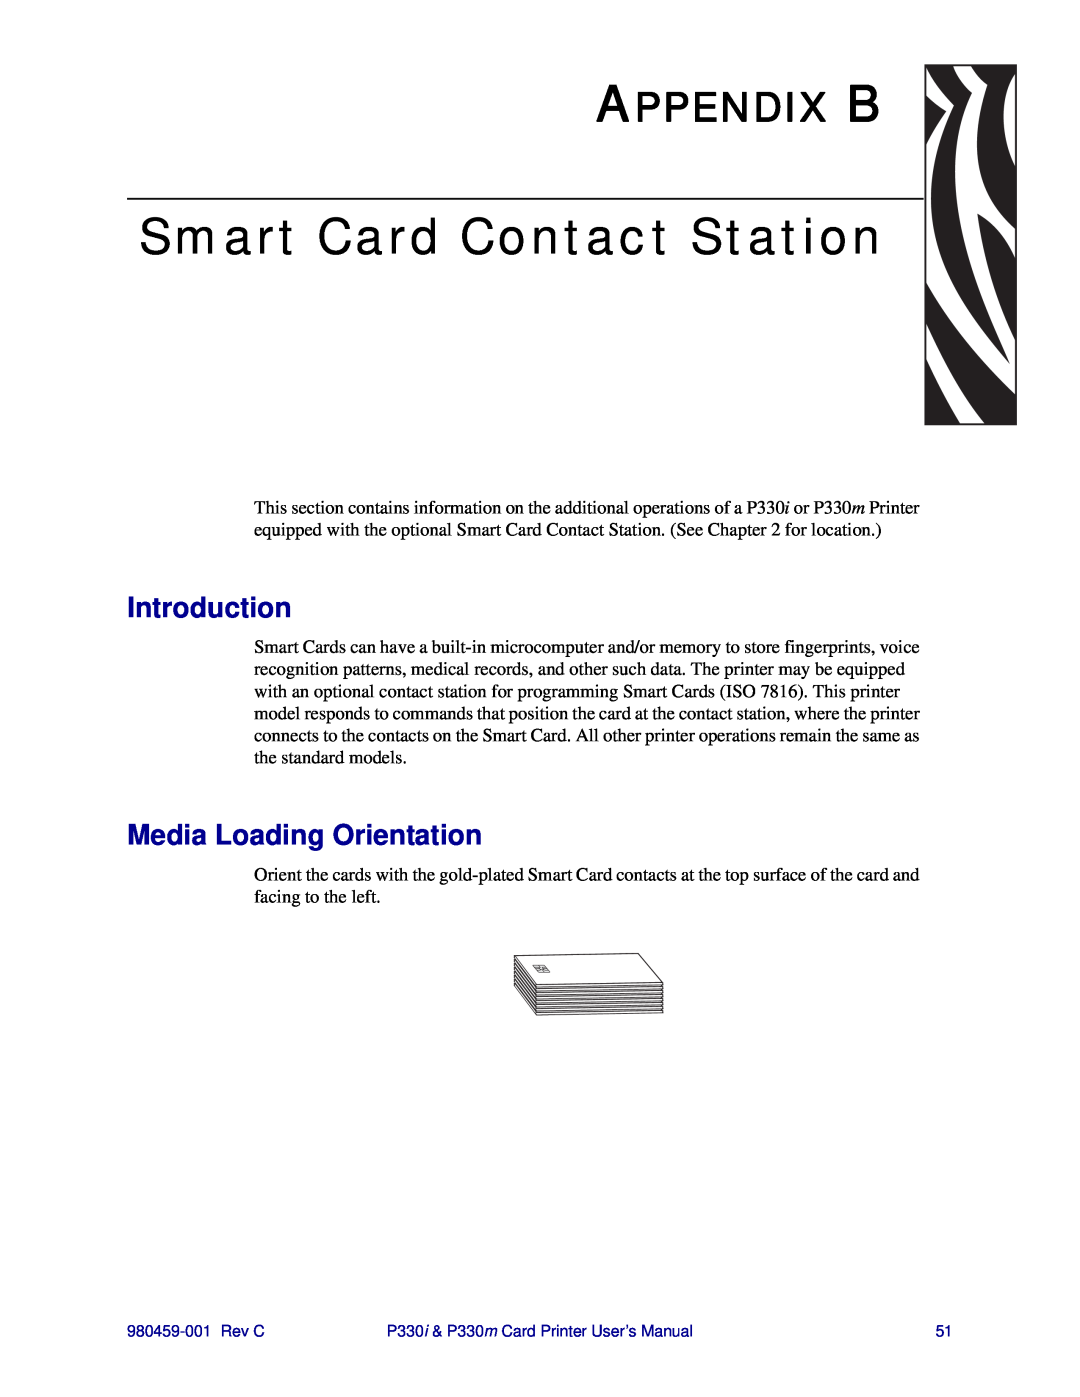 Zebra Technologies P330m, P330i user manual Smart Card Contact Station, Appendix B, Introduction, Media Loading Orientation 